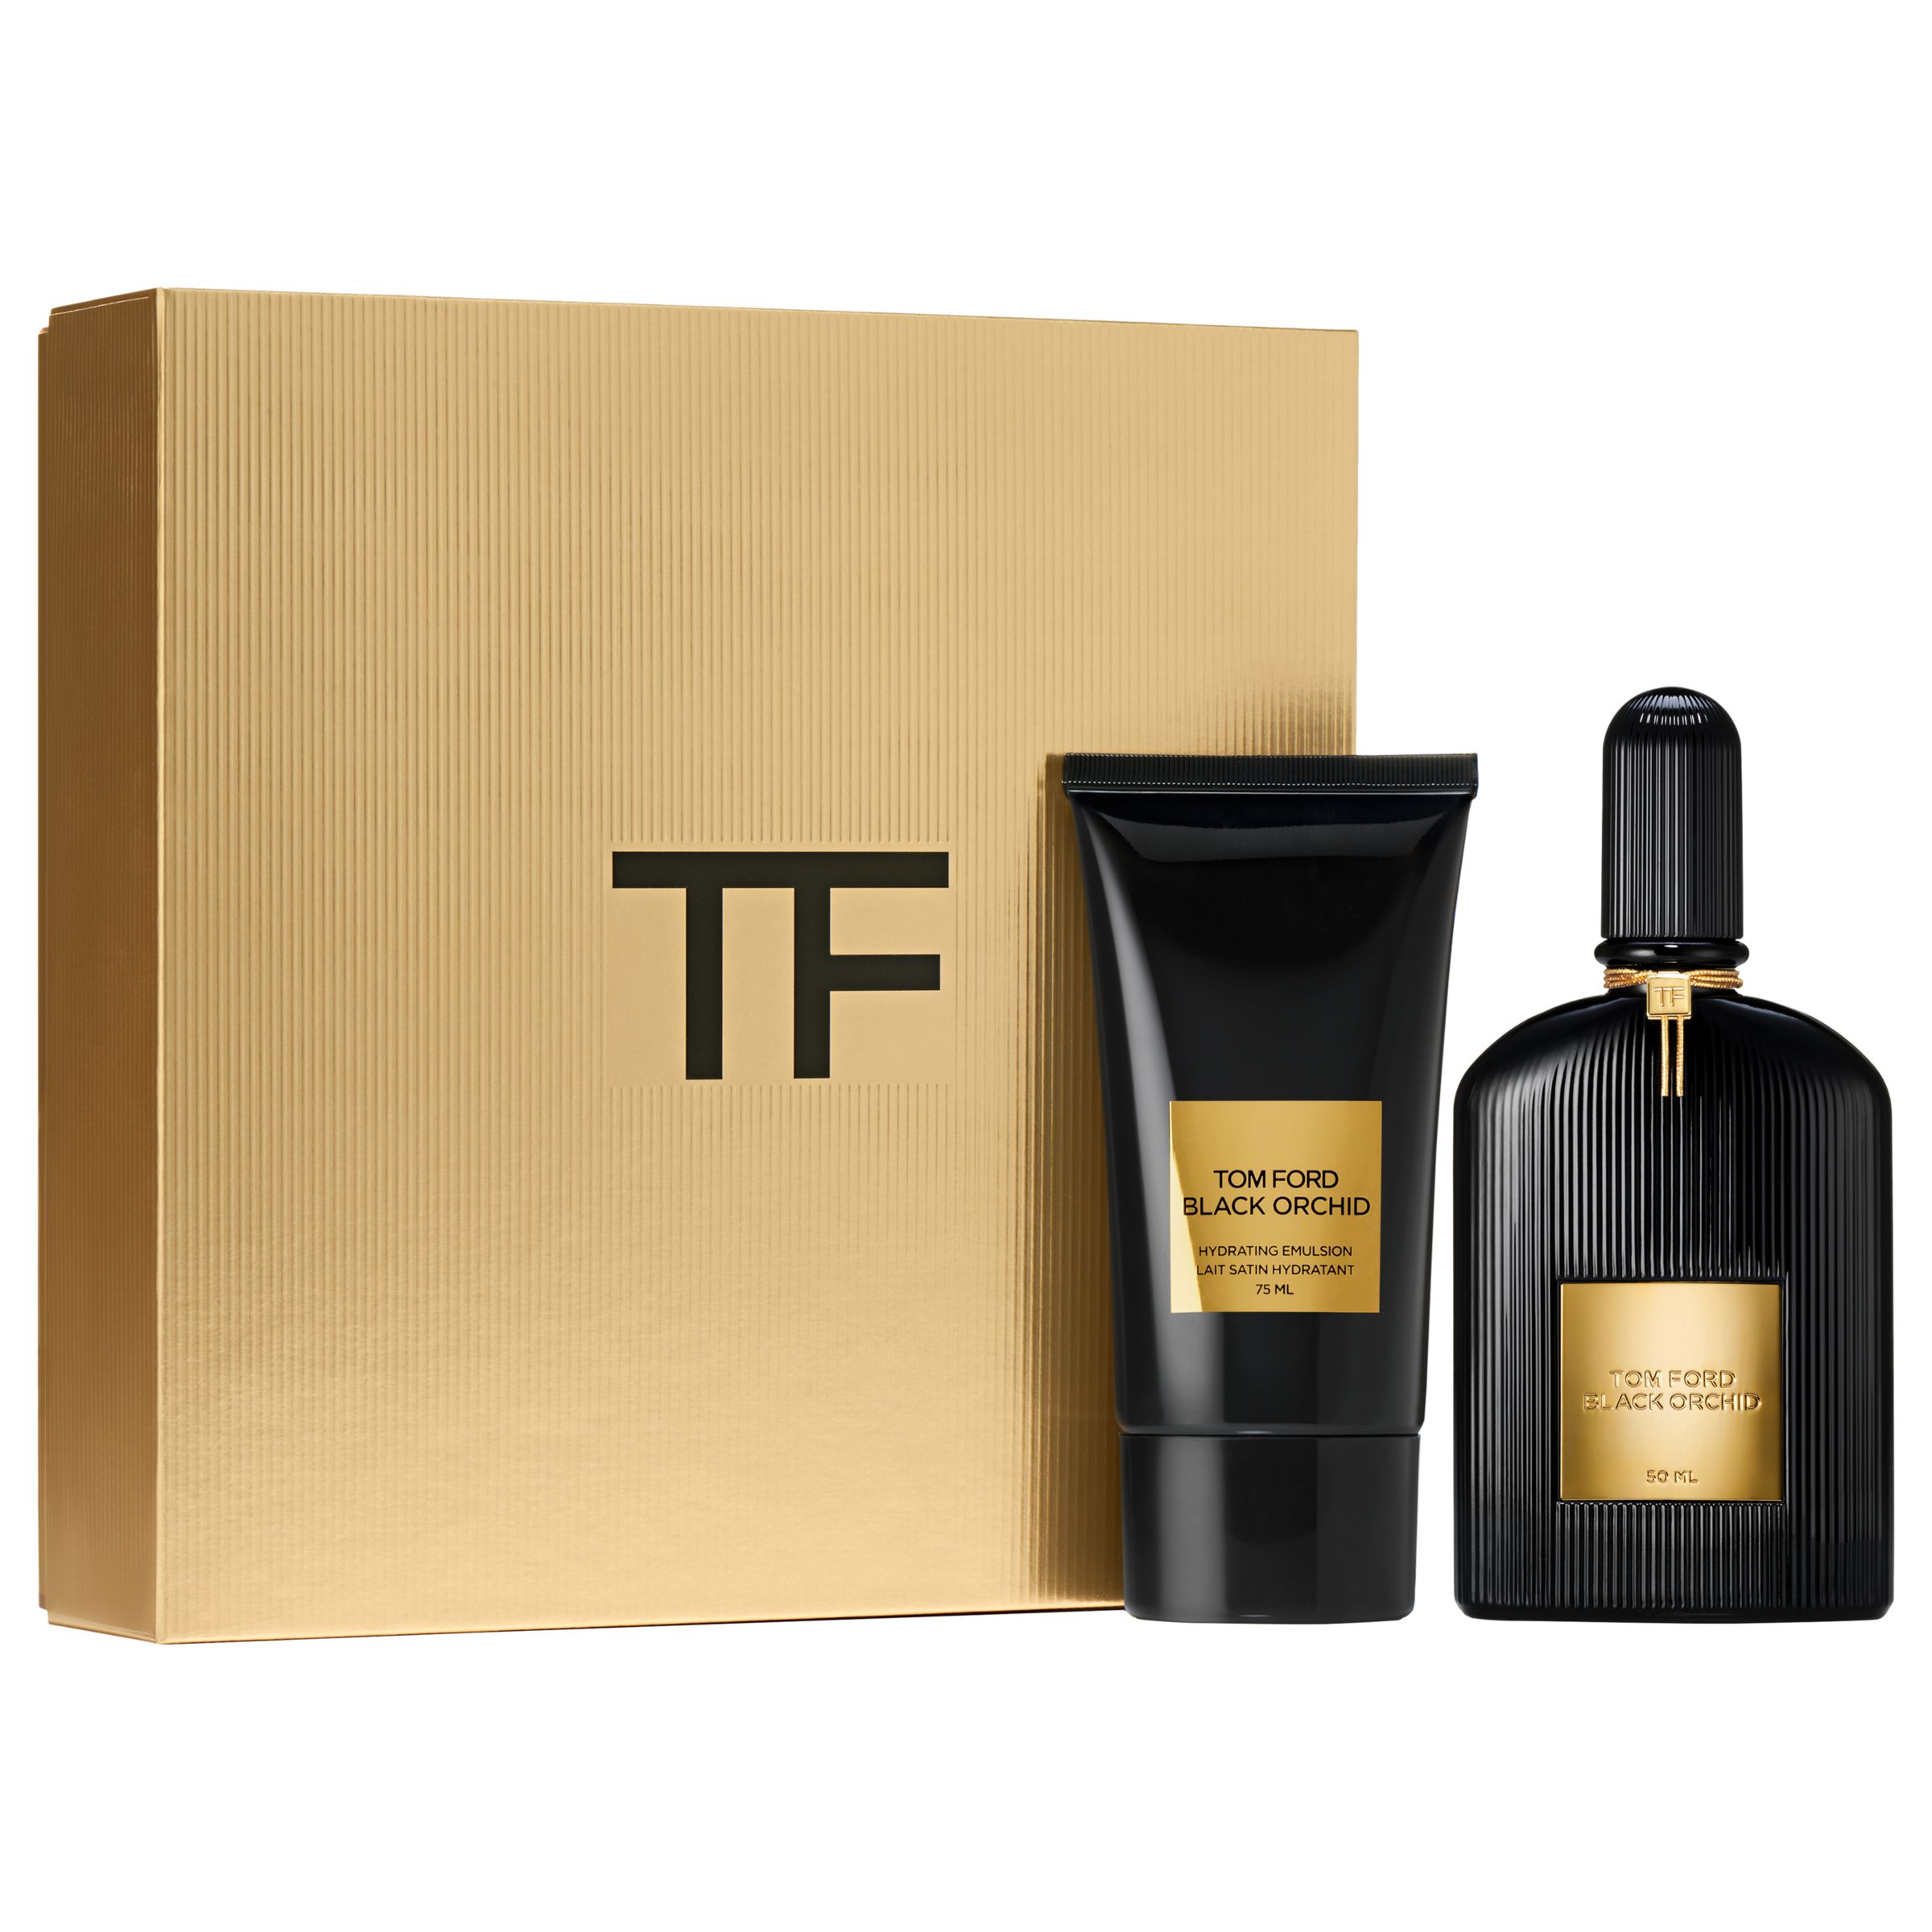 TOM FORD Black Orchid 50ml Eau de Parfum Fragrance Gift Set at John ...